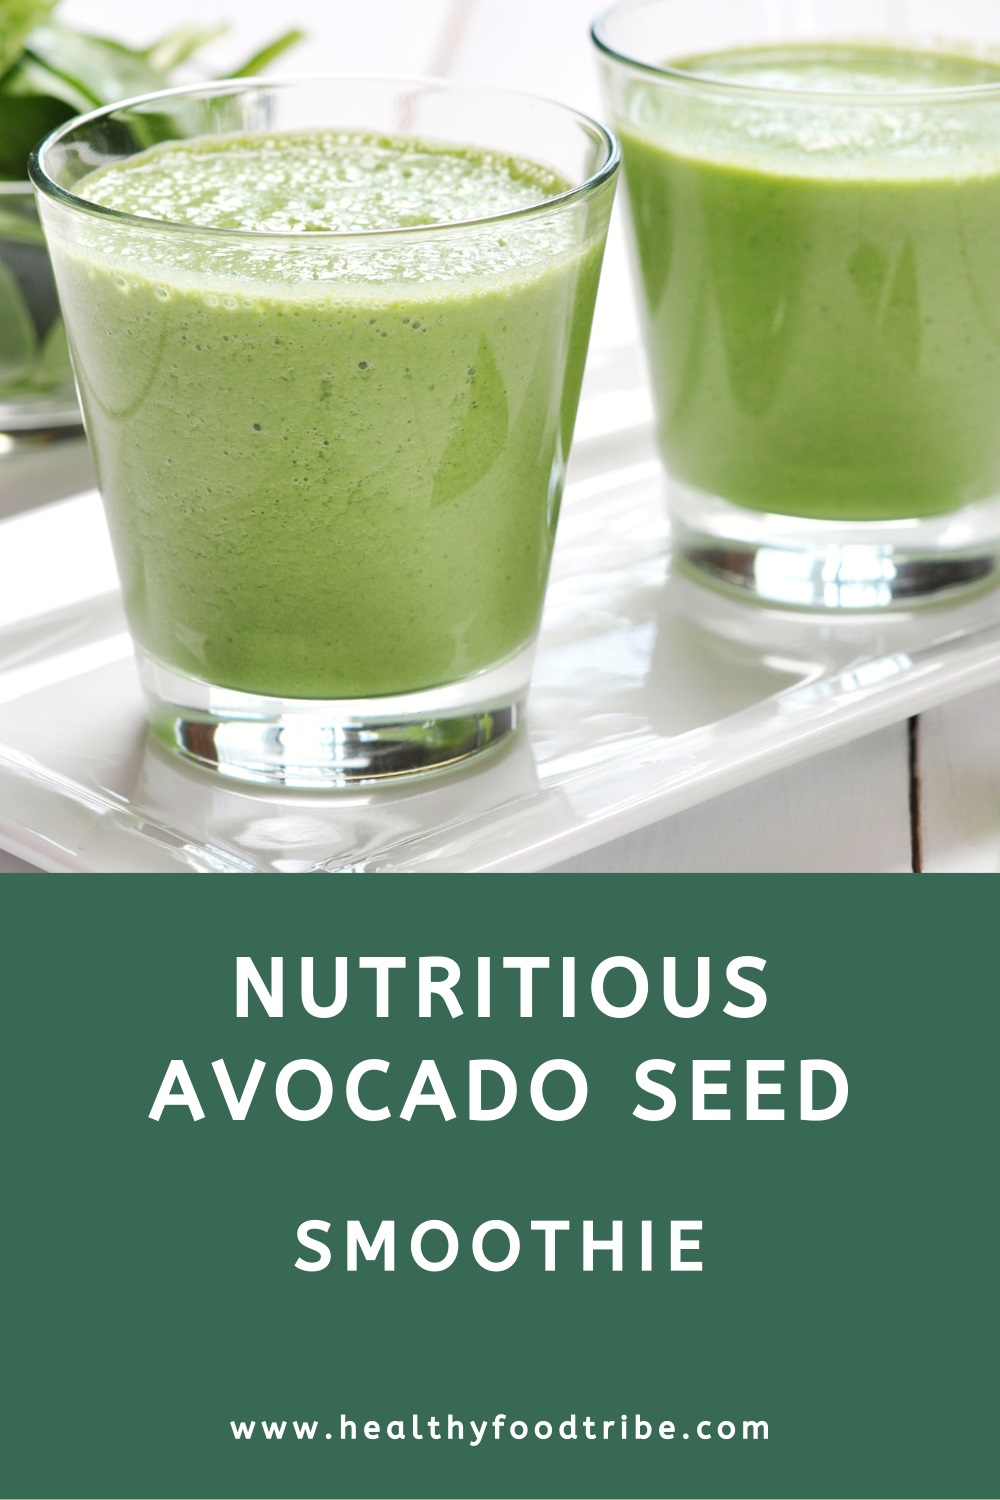 Avocado seed smoothie recipe